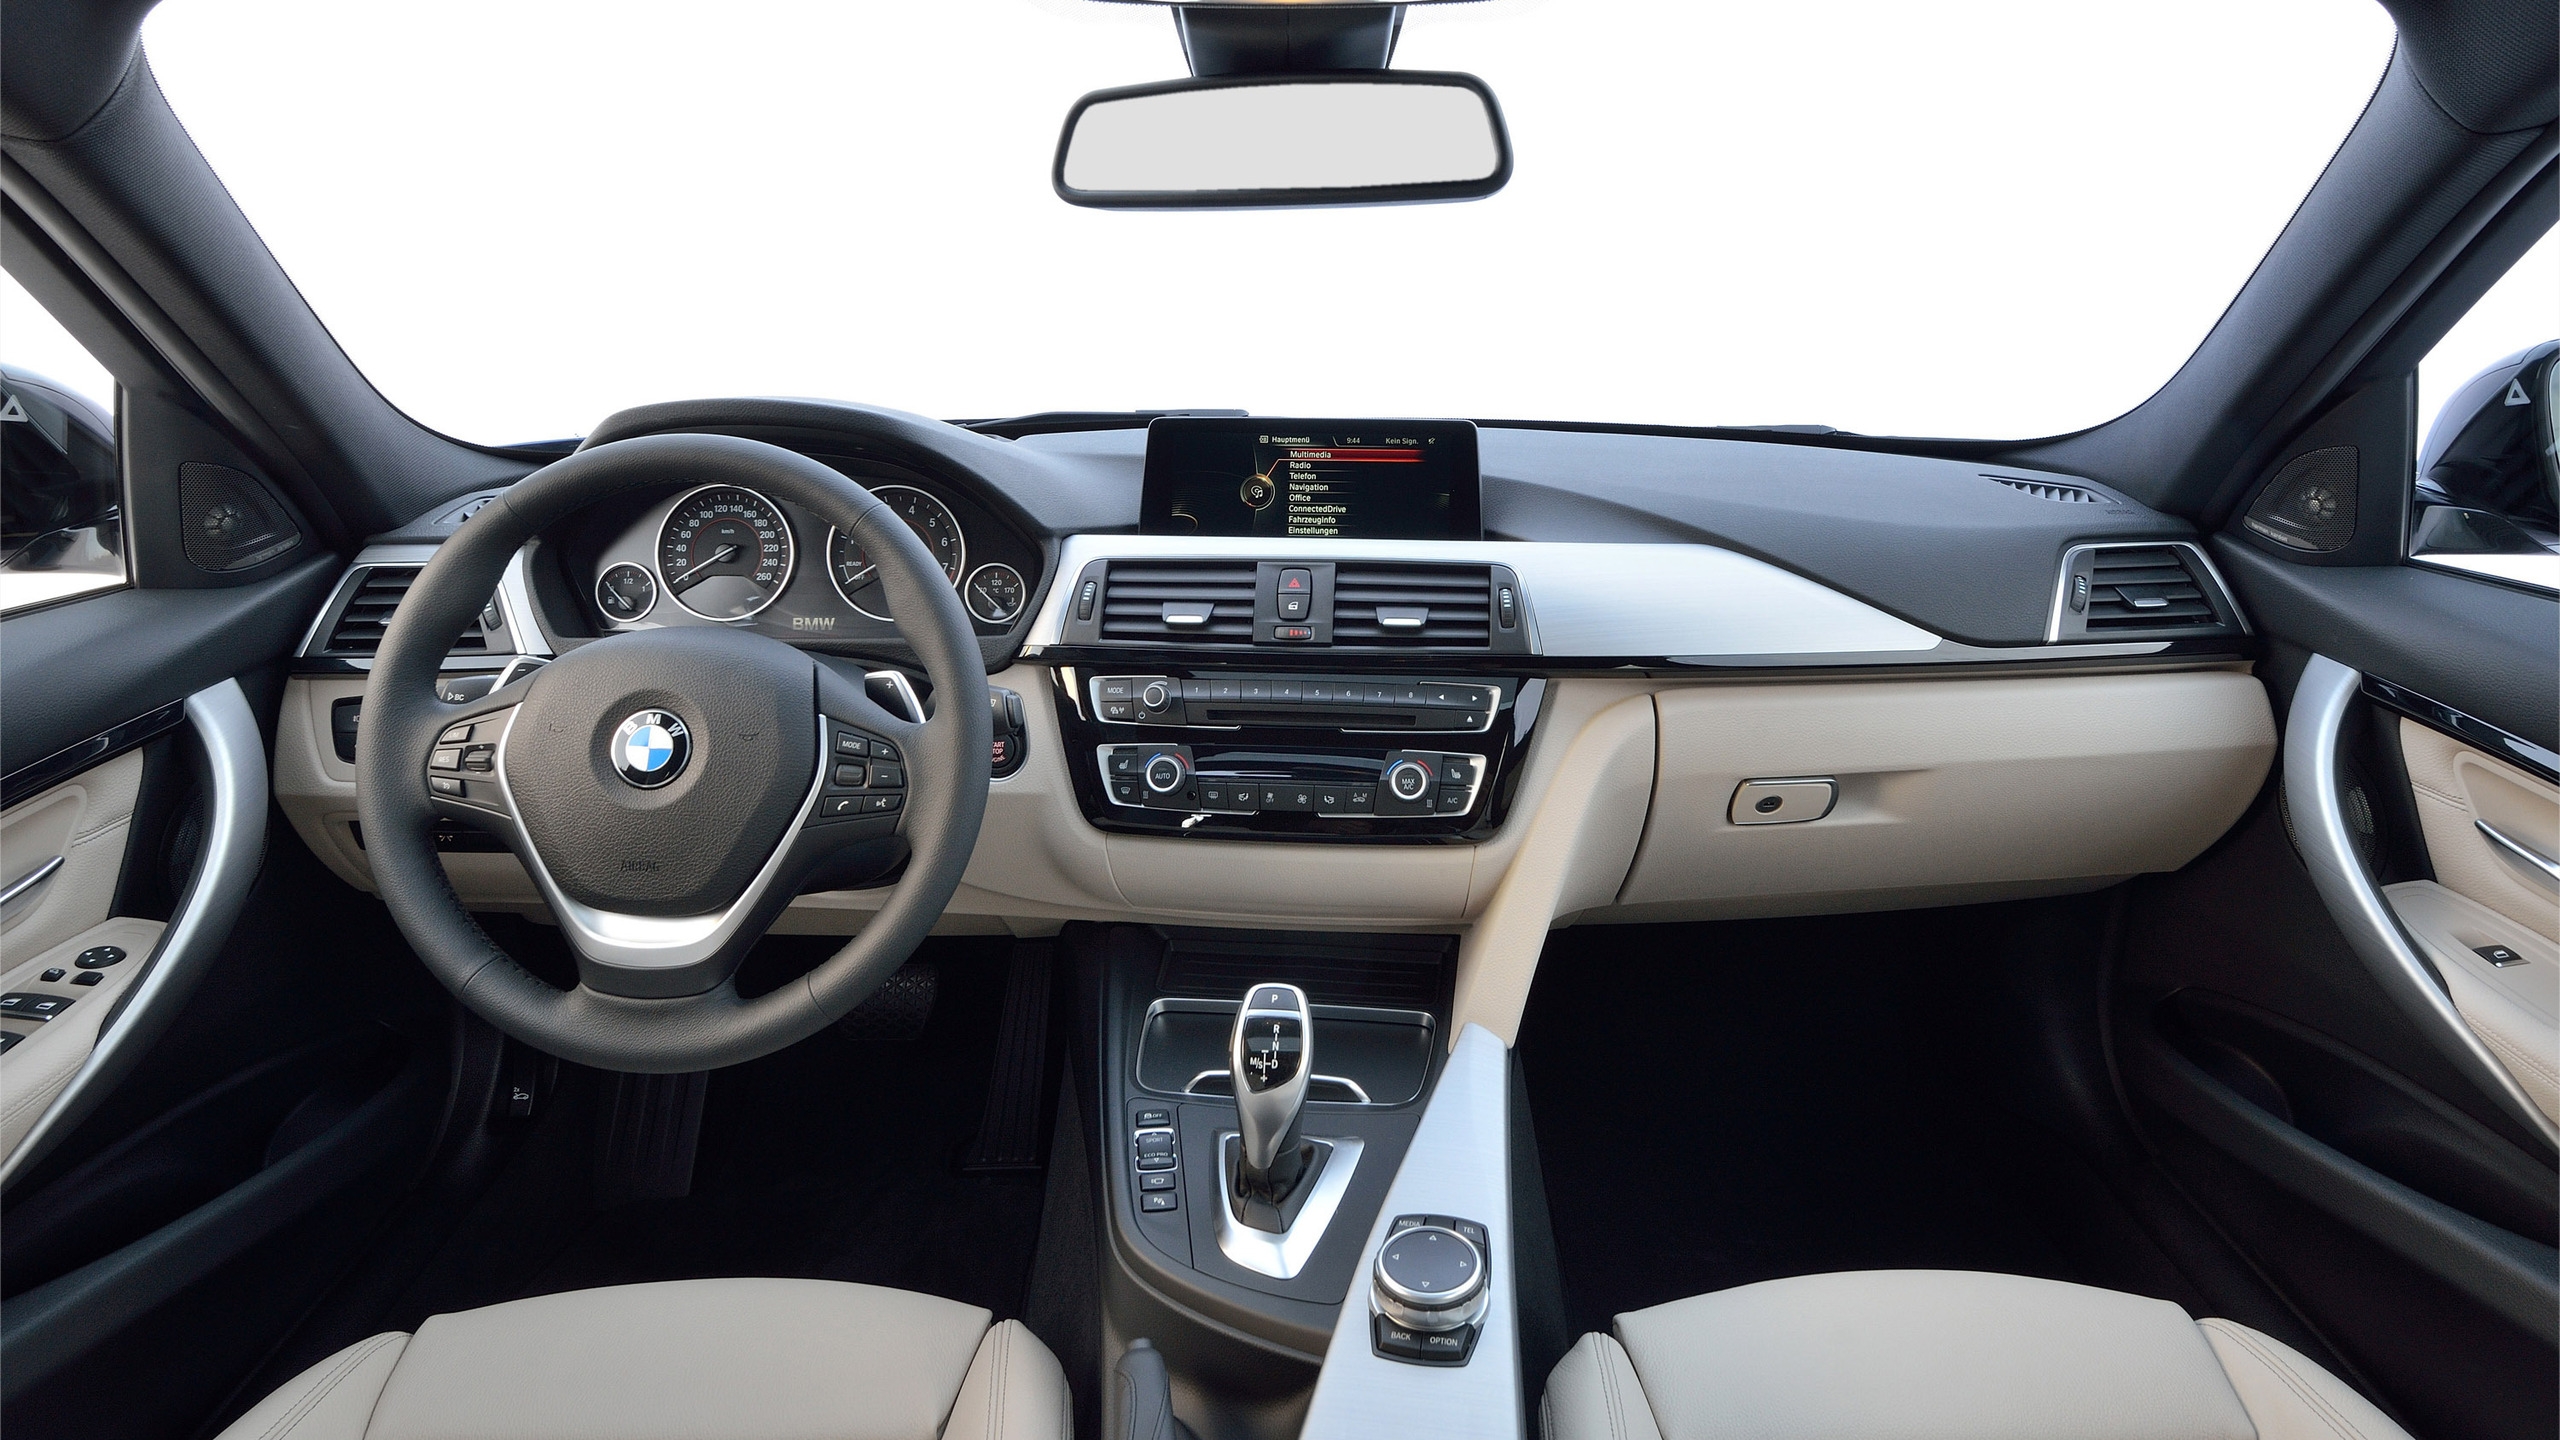 2016 BMW 3 Series Interior for 2560x1440 HDTV resolution